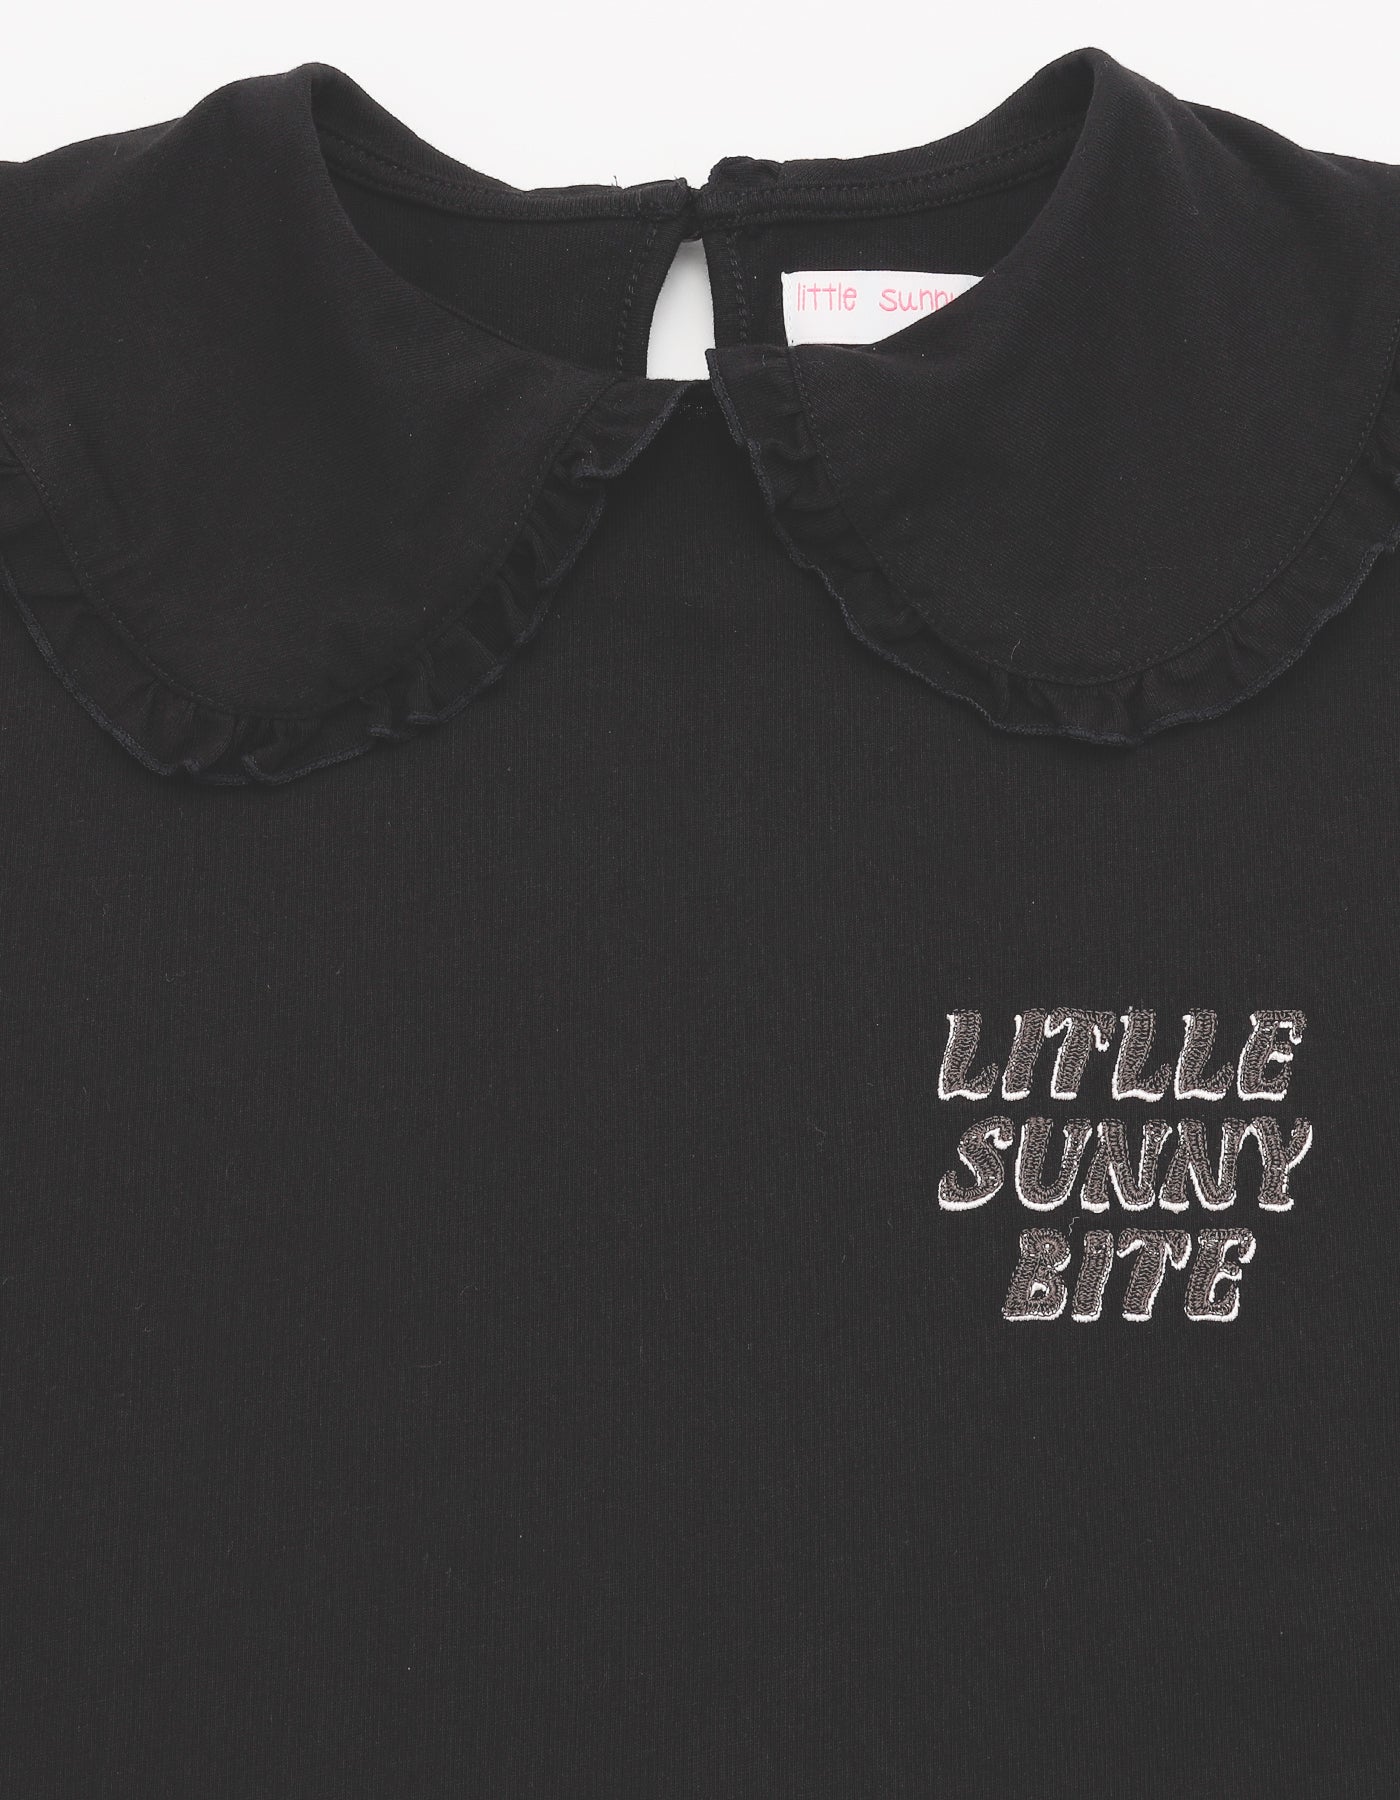 little sunny bite (リトルサニーバイト)Frill collar long tee dress